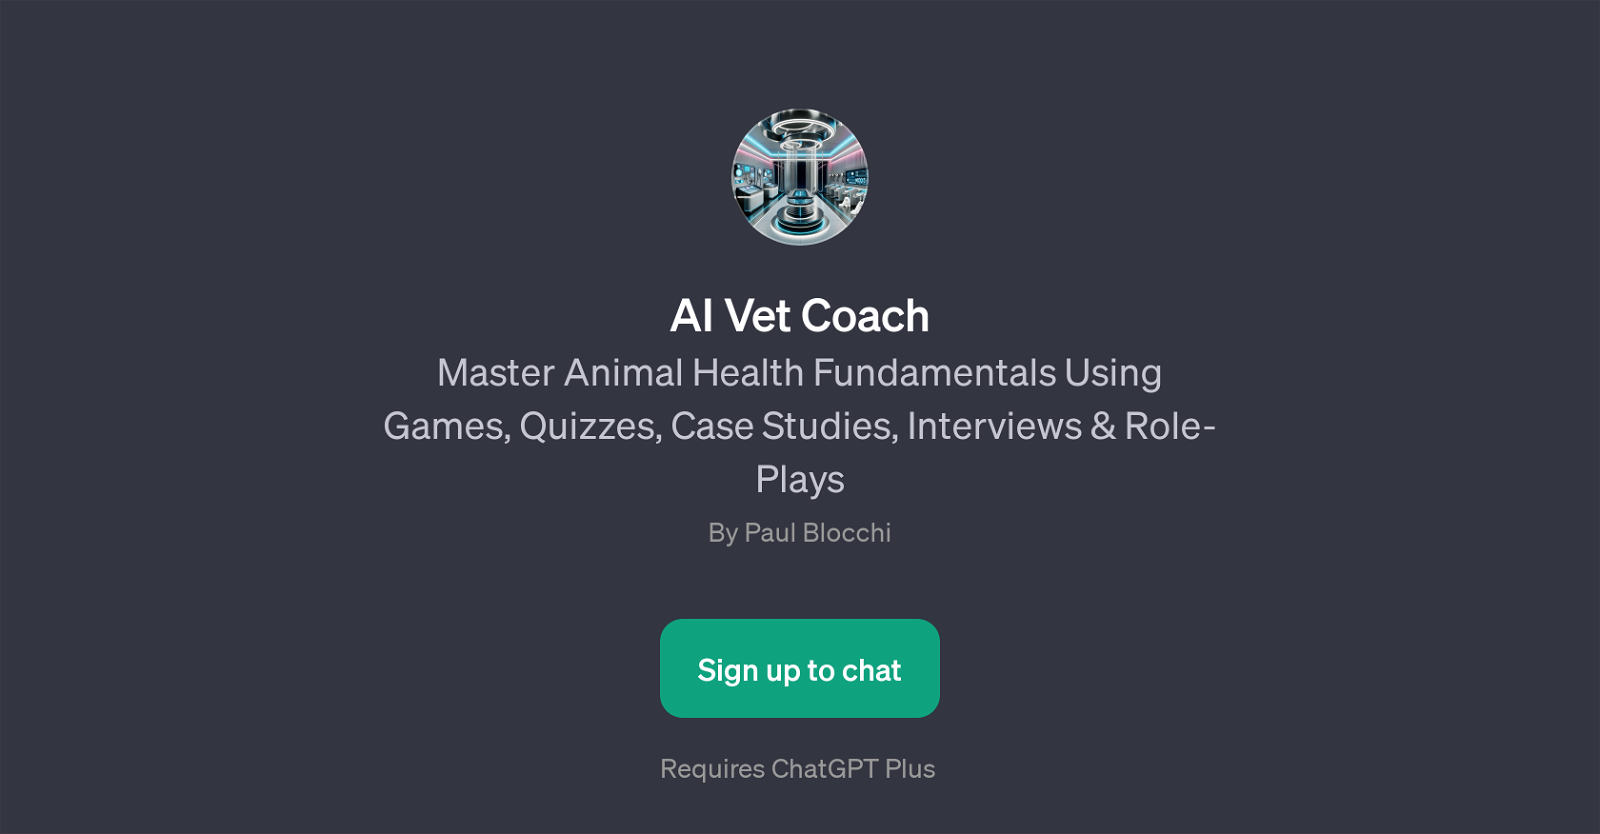 AI Vet Coach website